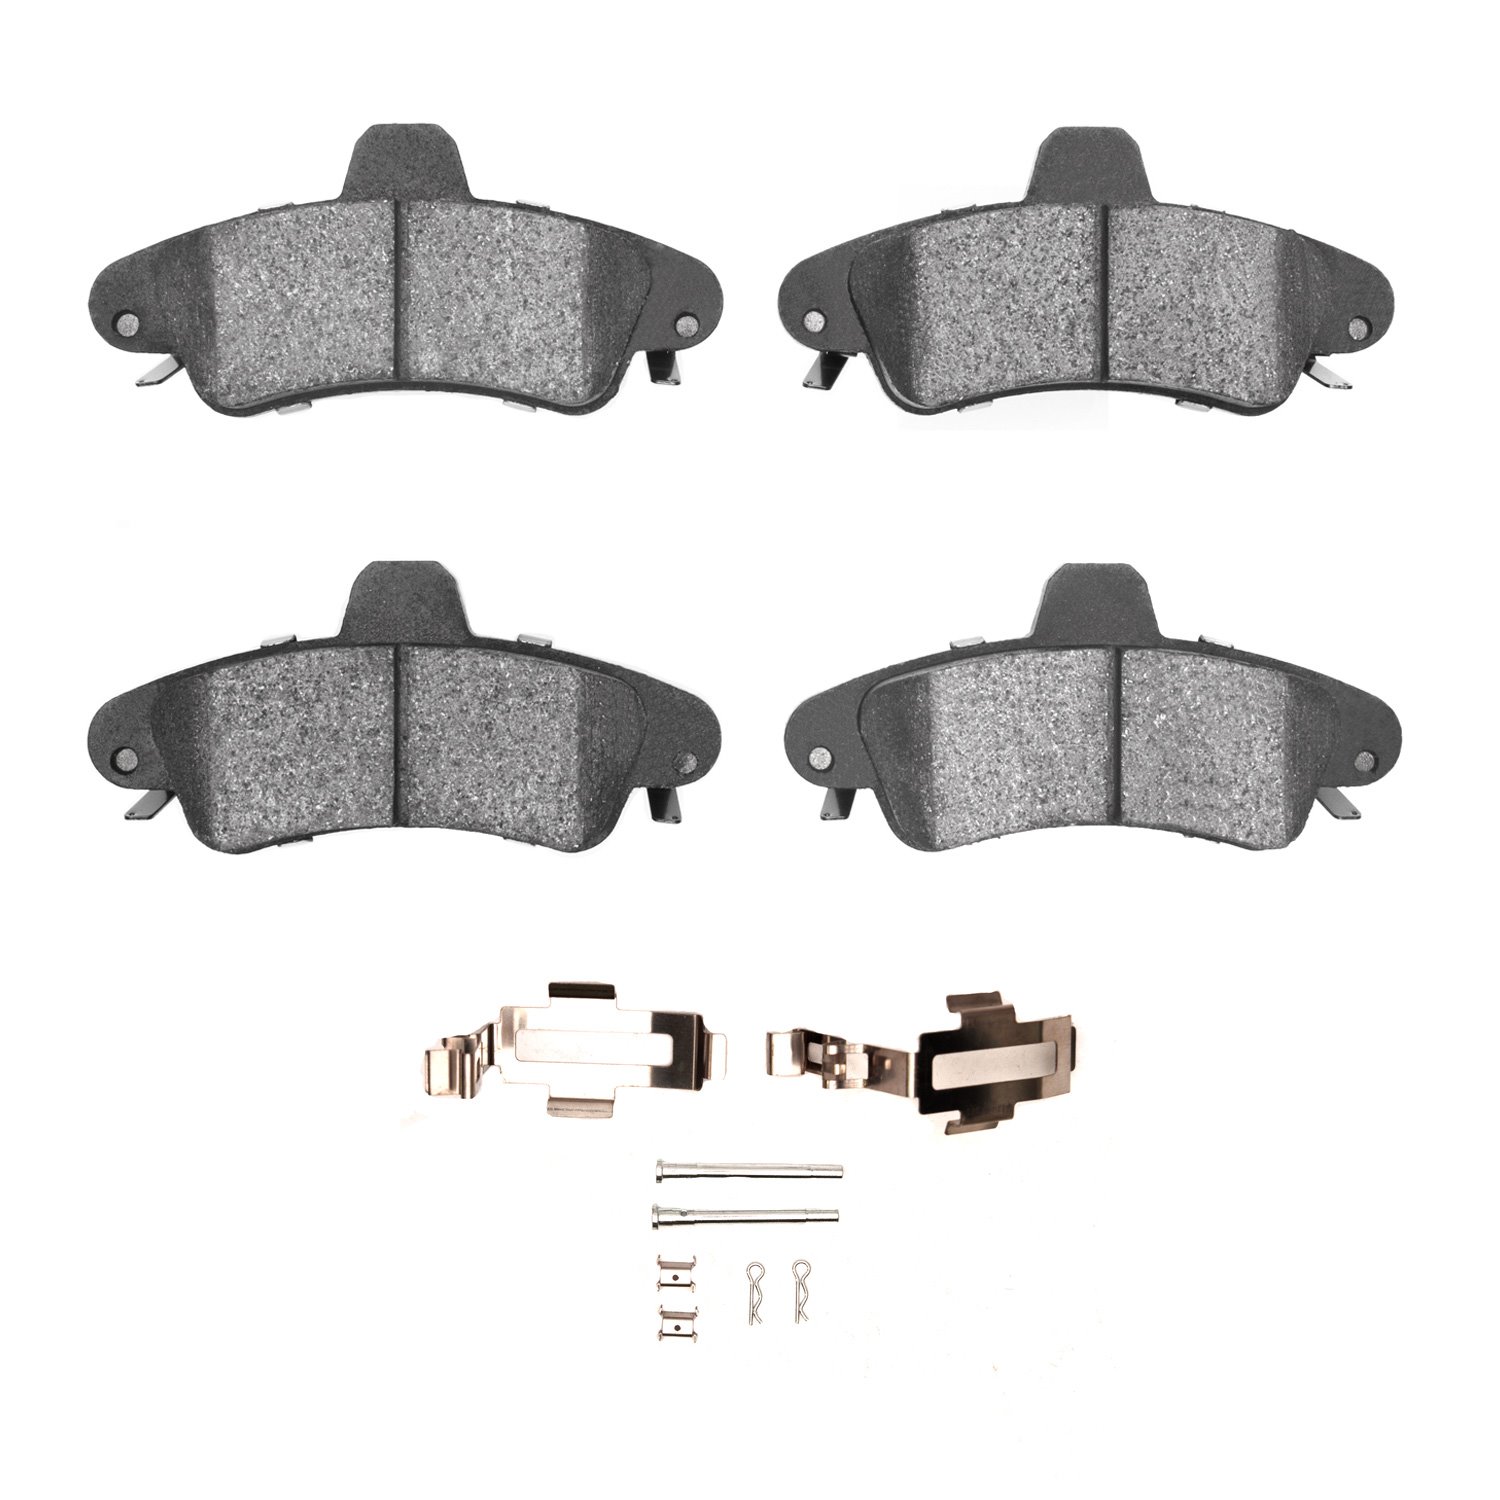 1310-0899-11 3000-Series Ceramic Brake Pads & Hardware Kit, 1995-2002 Ford/Lincoln/Mercury/Mazda, Position: Rear